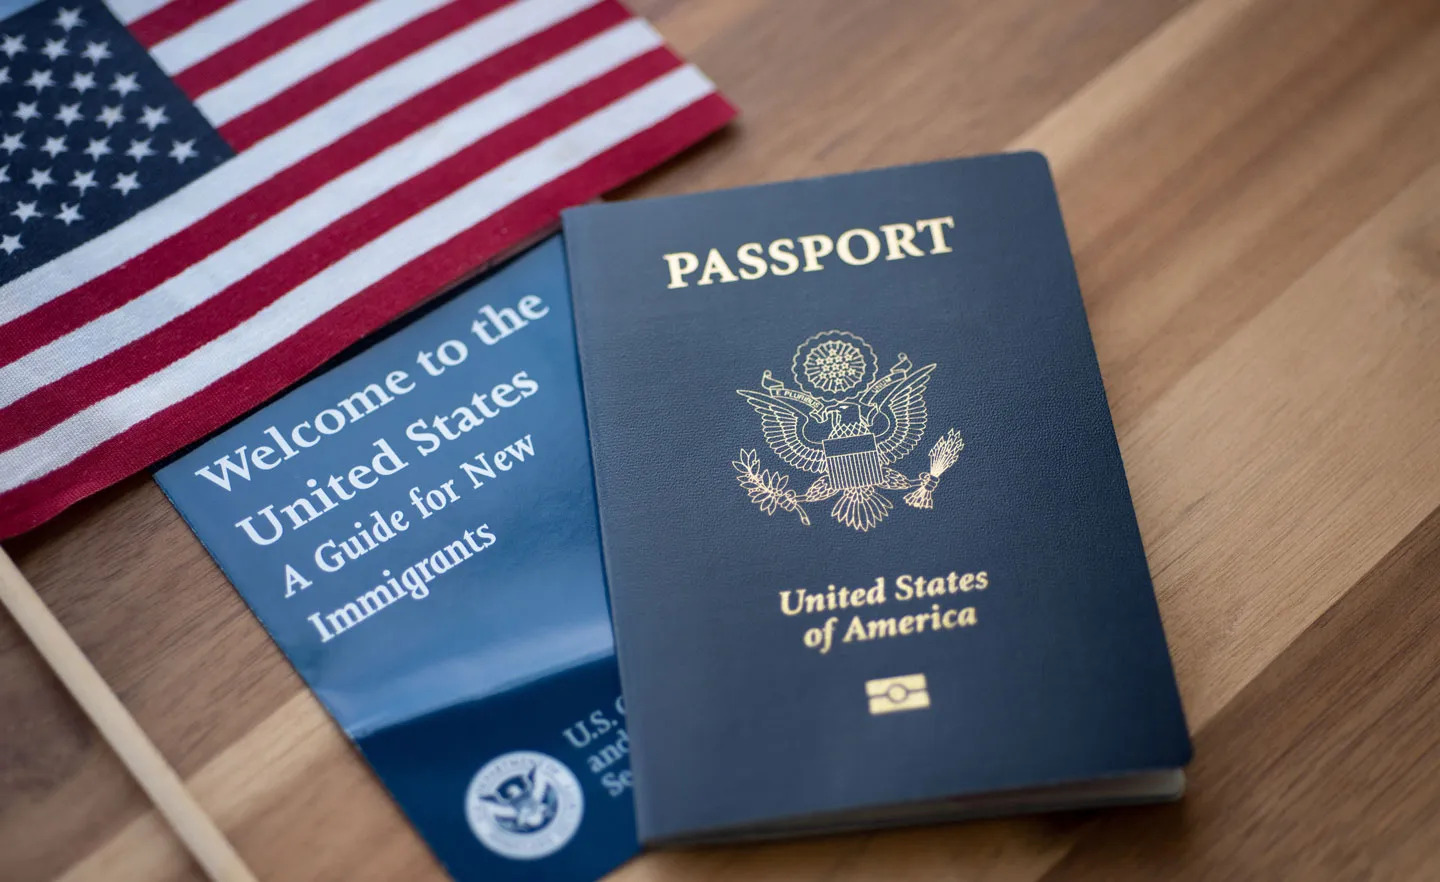 India Passport provider - A1 Passport & Visa services, New York